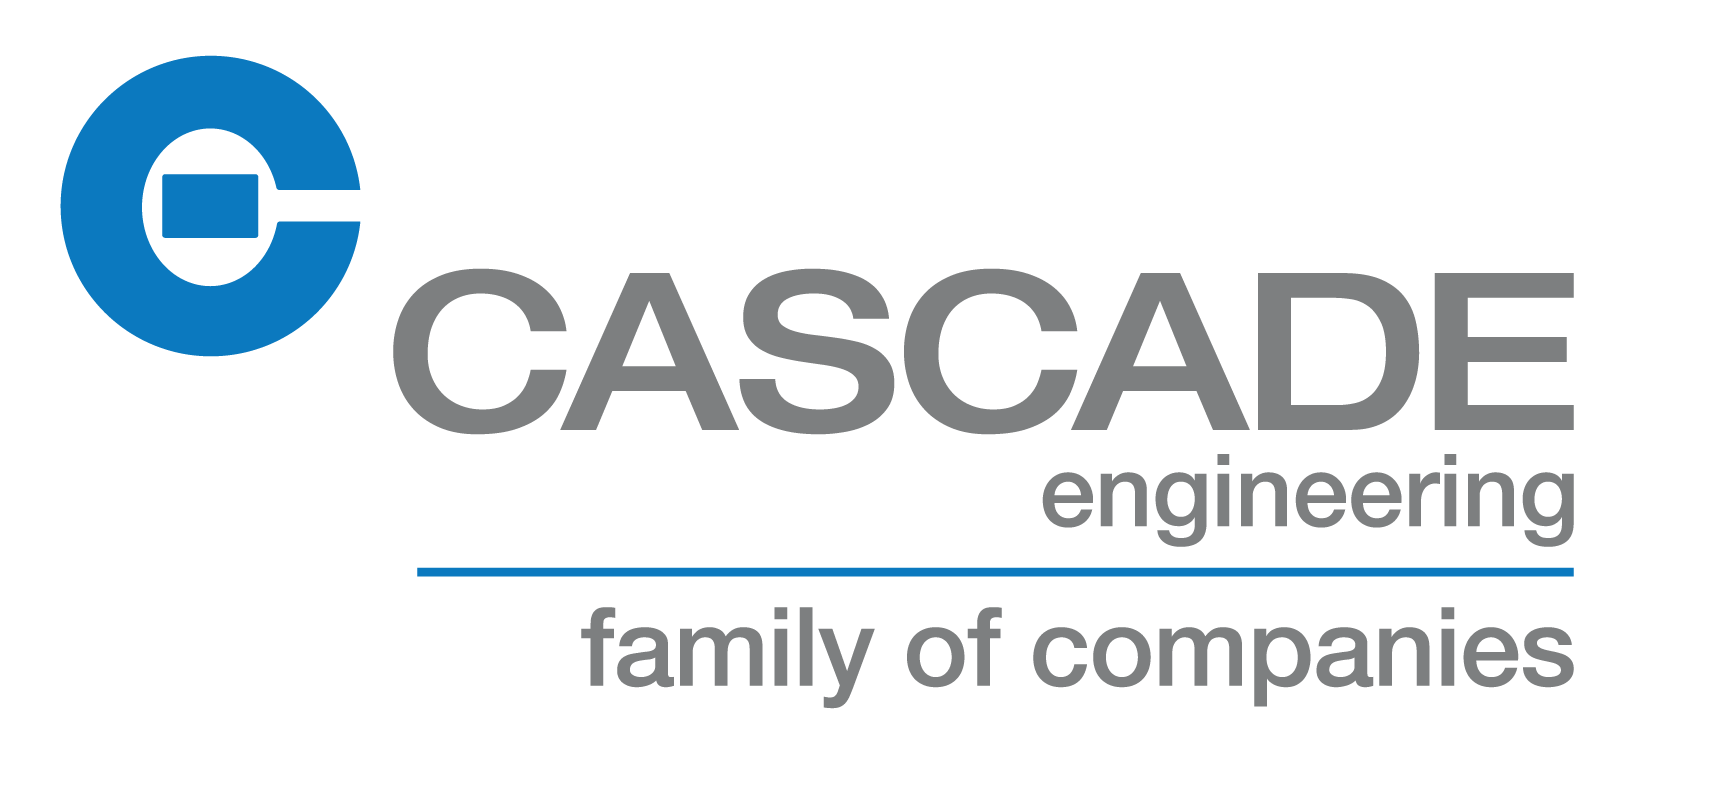 Cascade Engineering